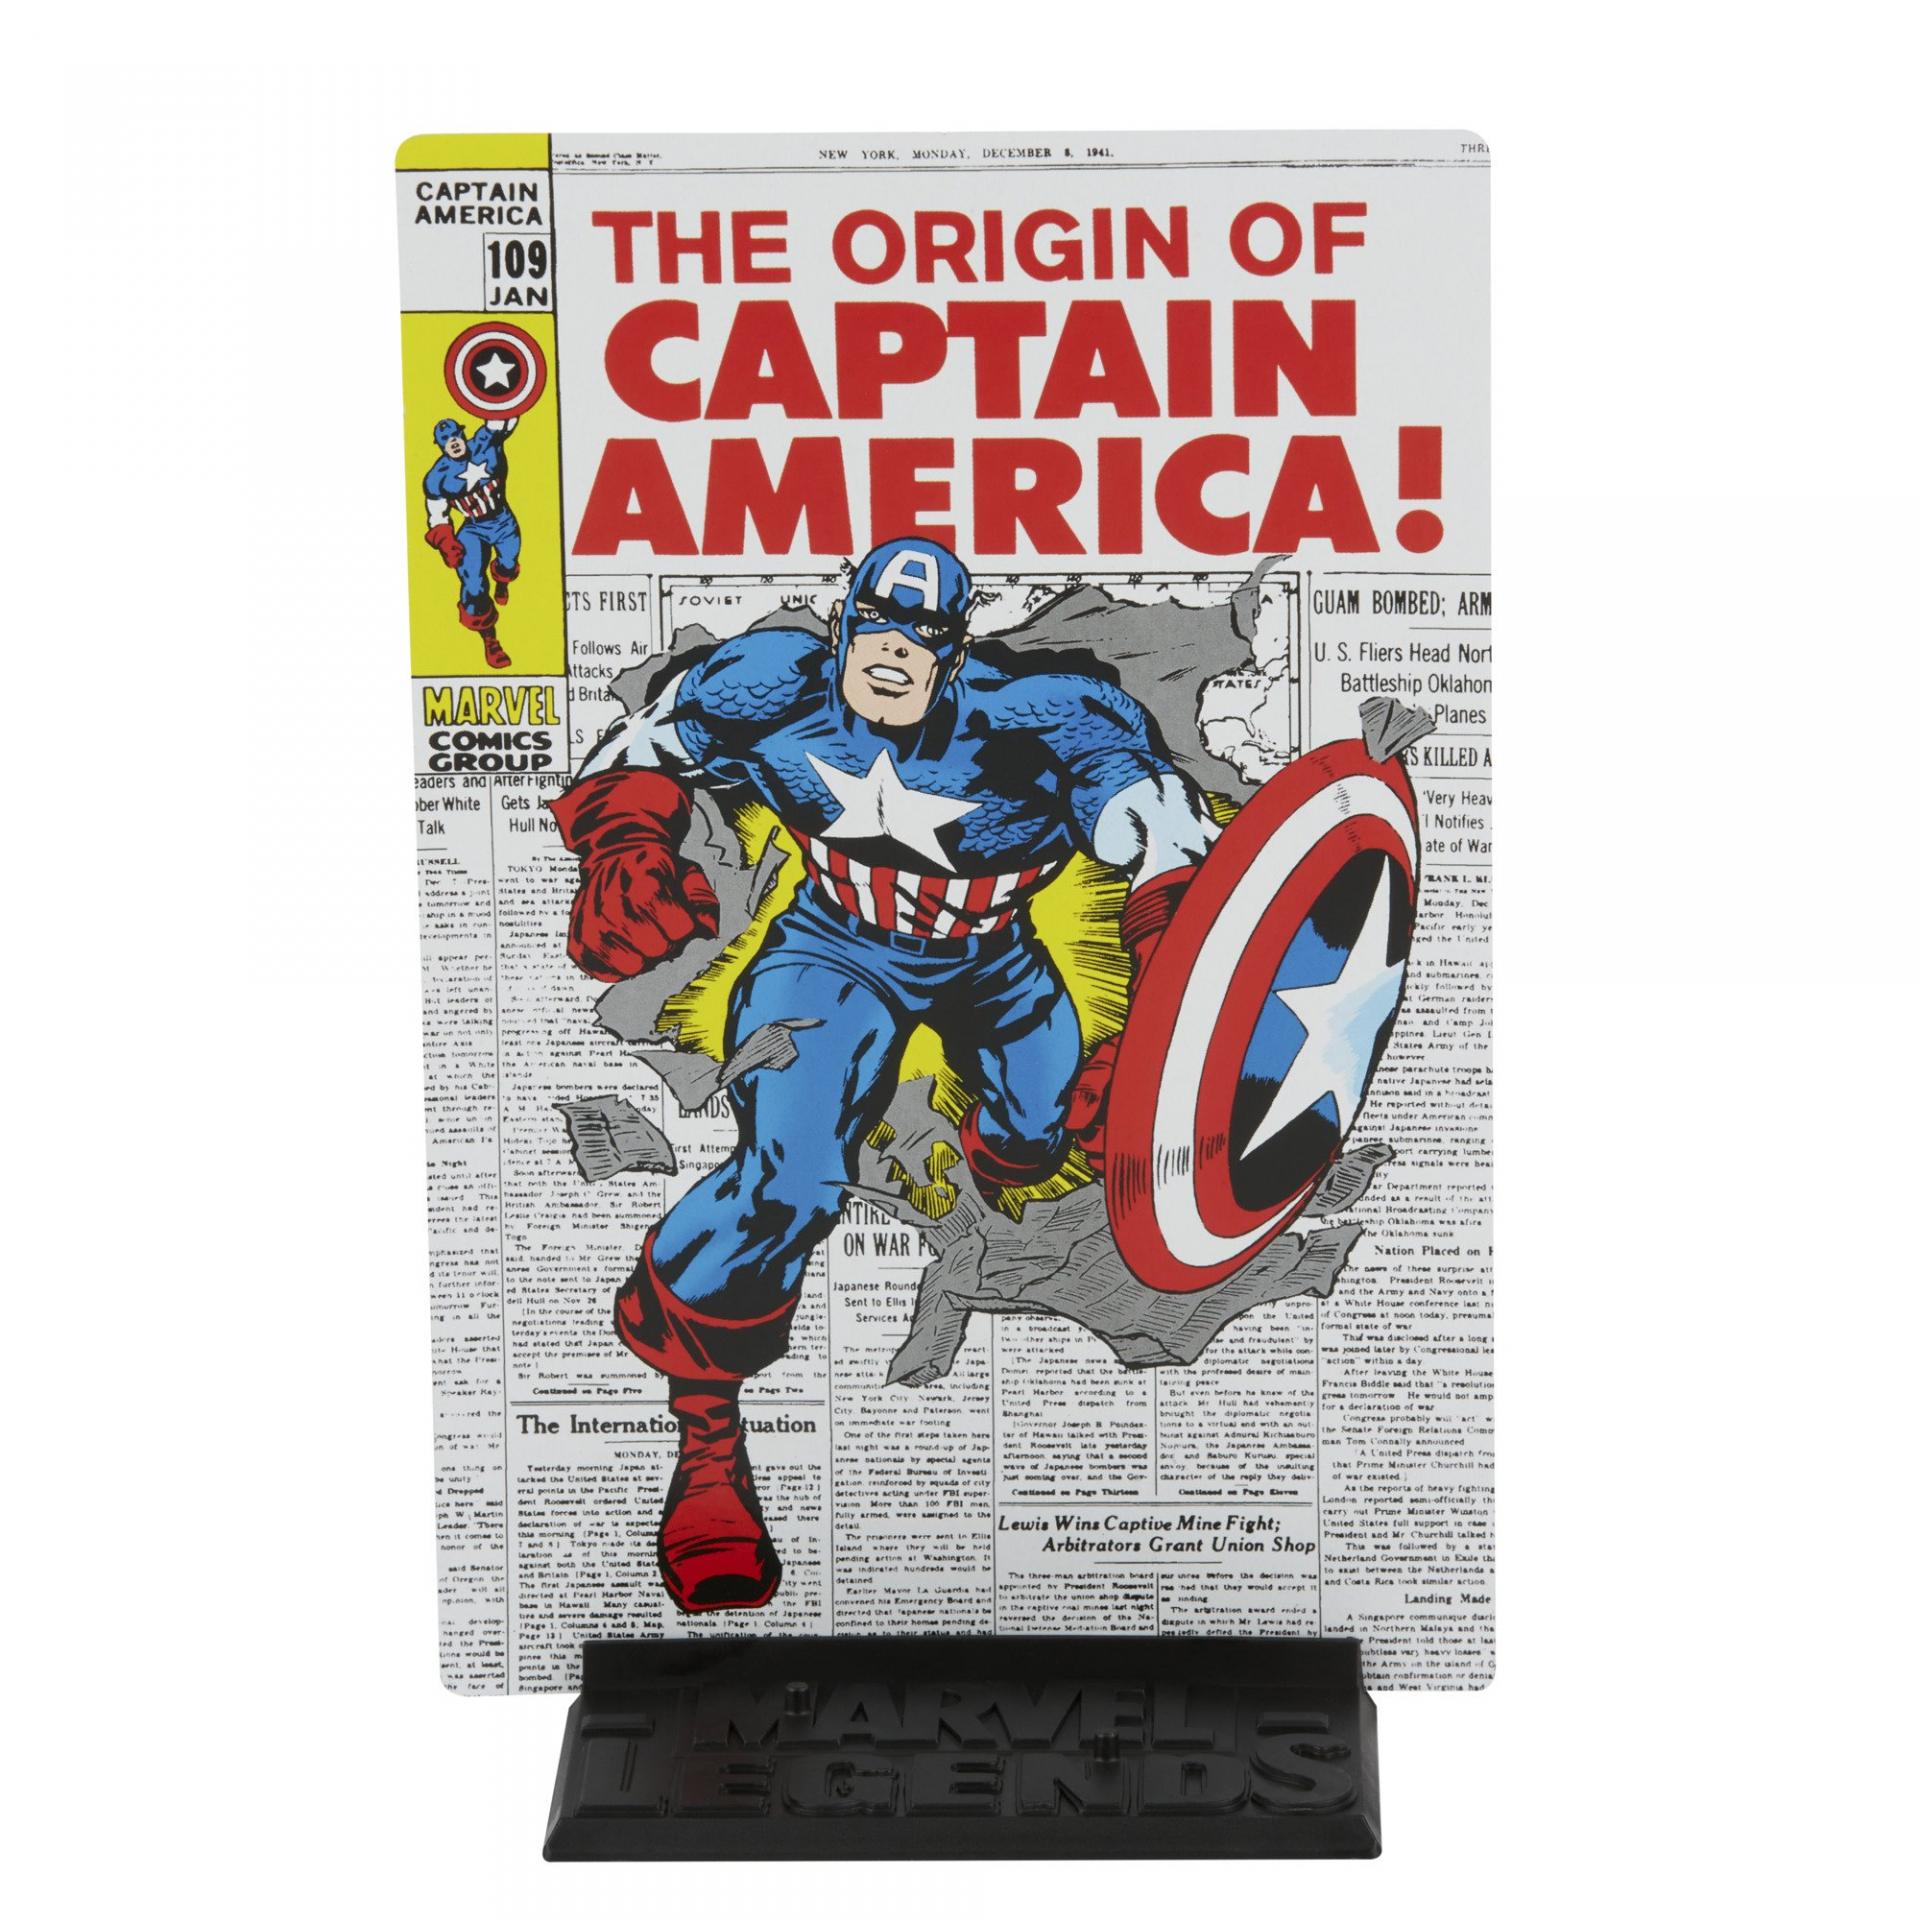 Marvel legends series 1 hasbro captain america11